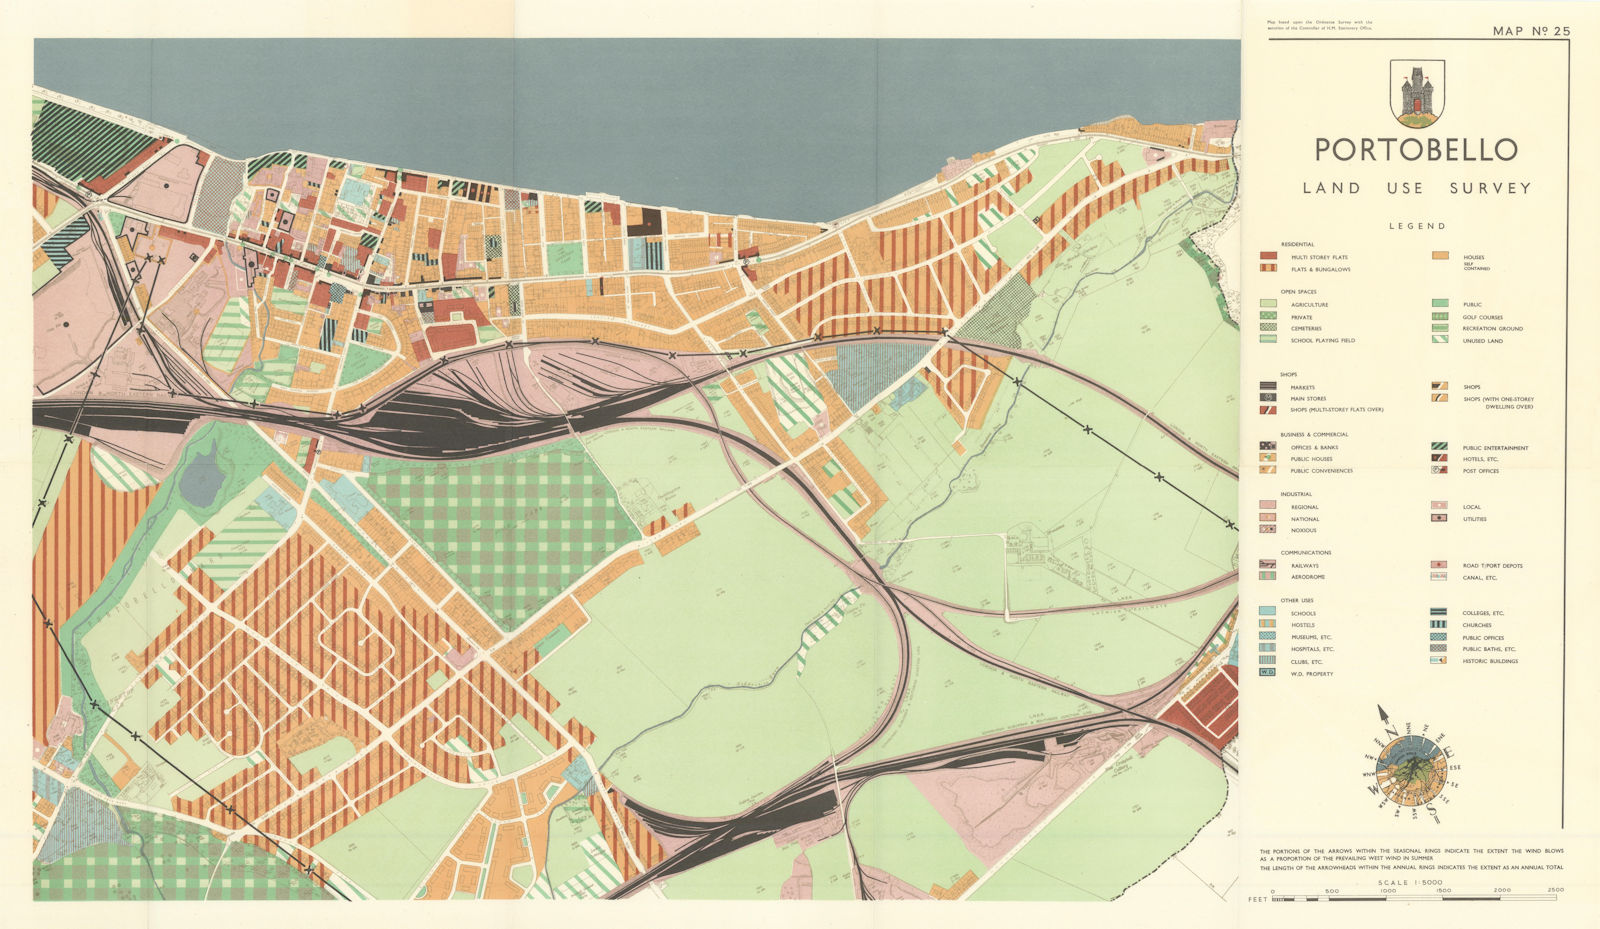 EDINBURGH. Land Utilisation Survey of Portobello. PATRICK ABERCROMBIE 1949 map